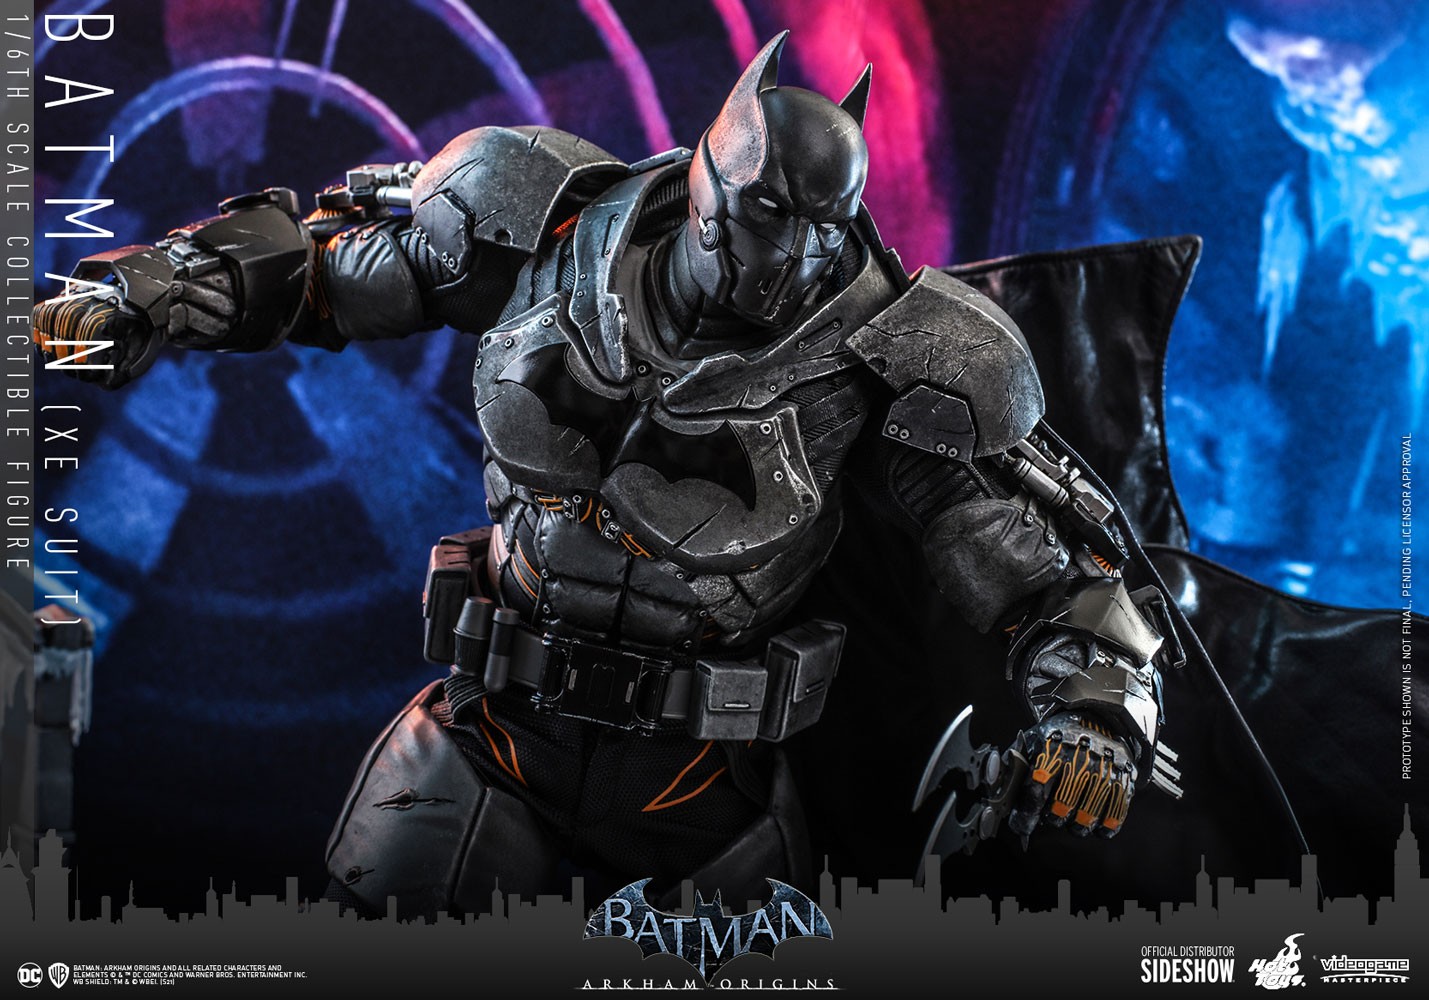 Batman (XE Suit) (Special Edition) Exclusive Edition (Prototype Shown) View 15